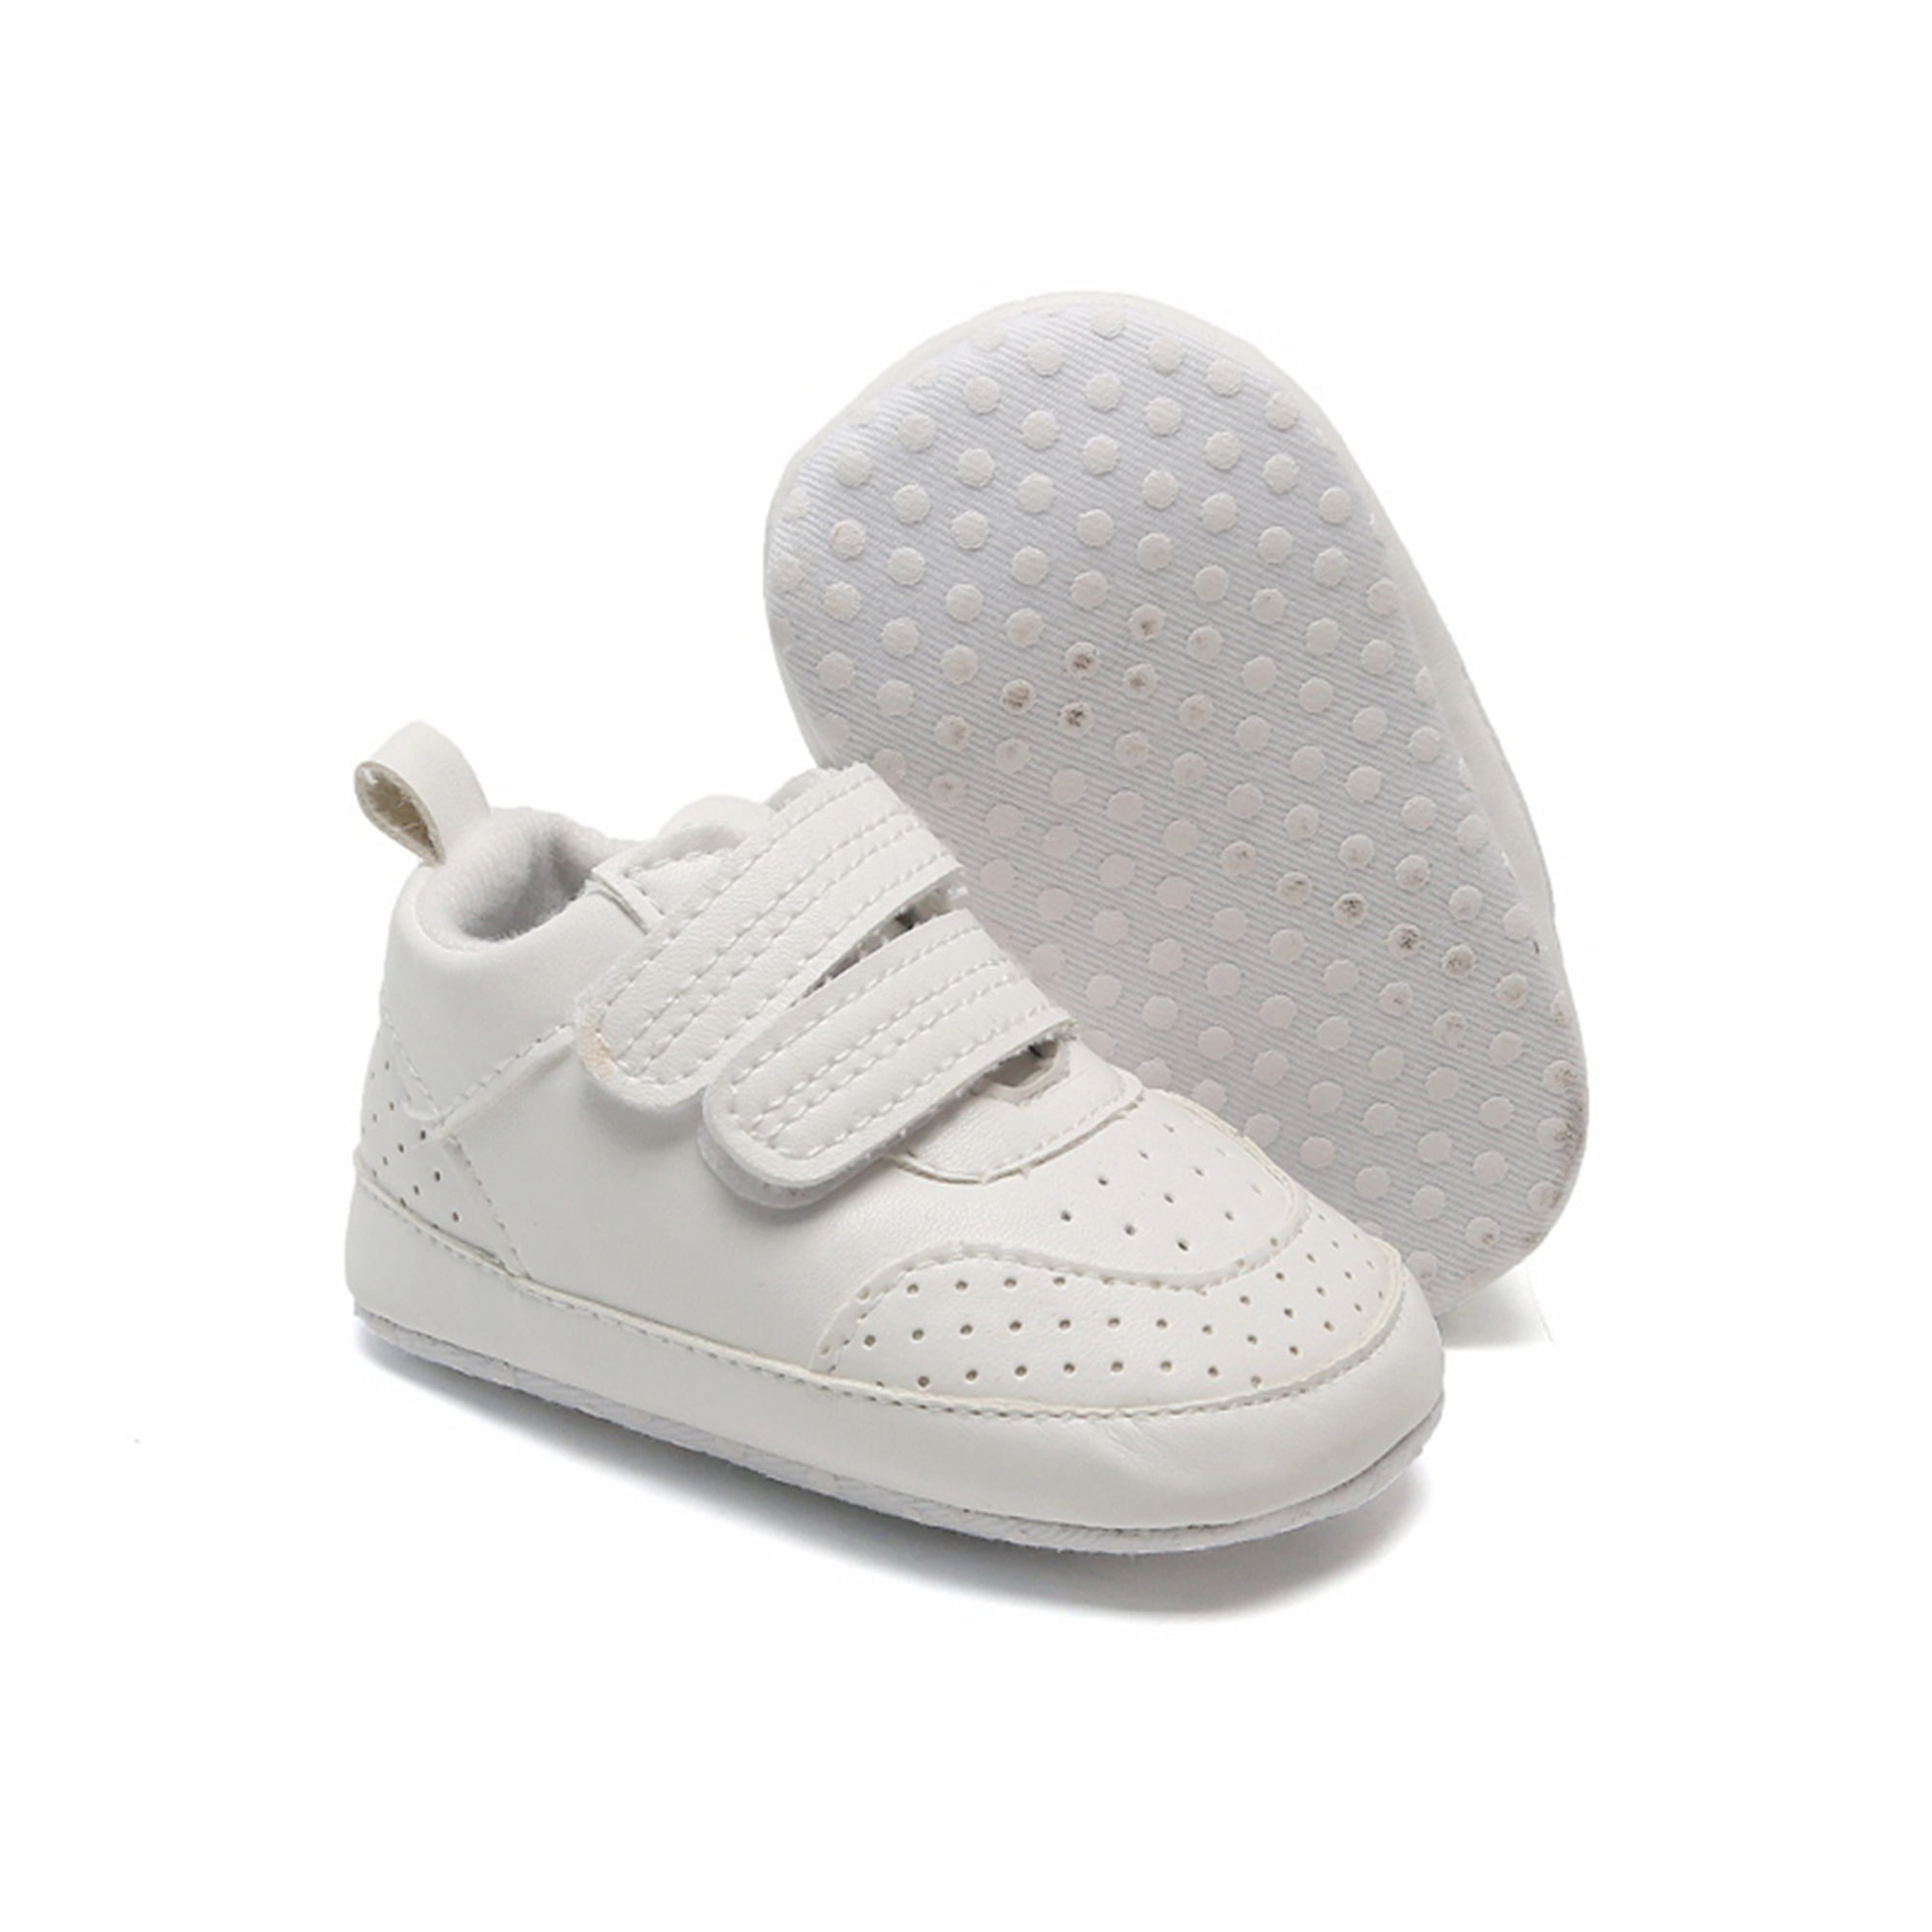 Toddler Infant Baby Kids Girl Soft Sole Crib Shoes Anti-slip Sneaker Prewalker 